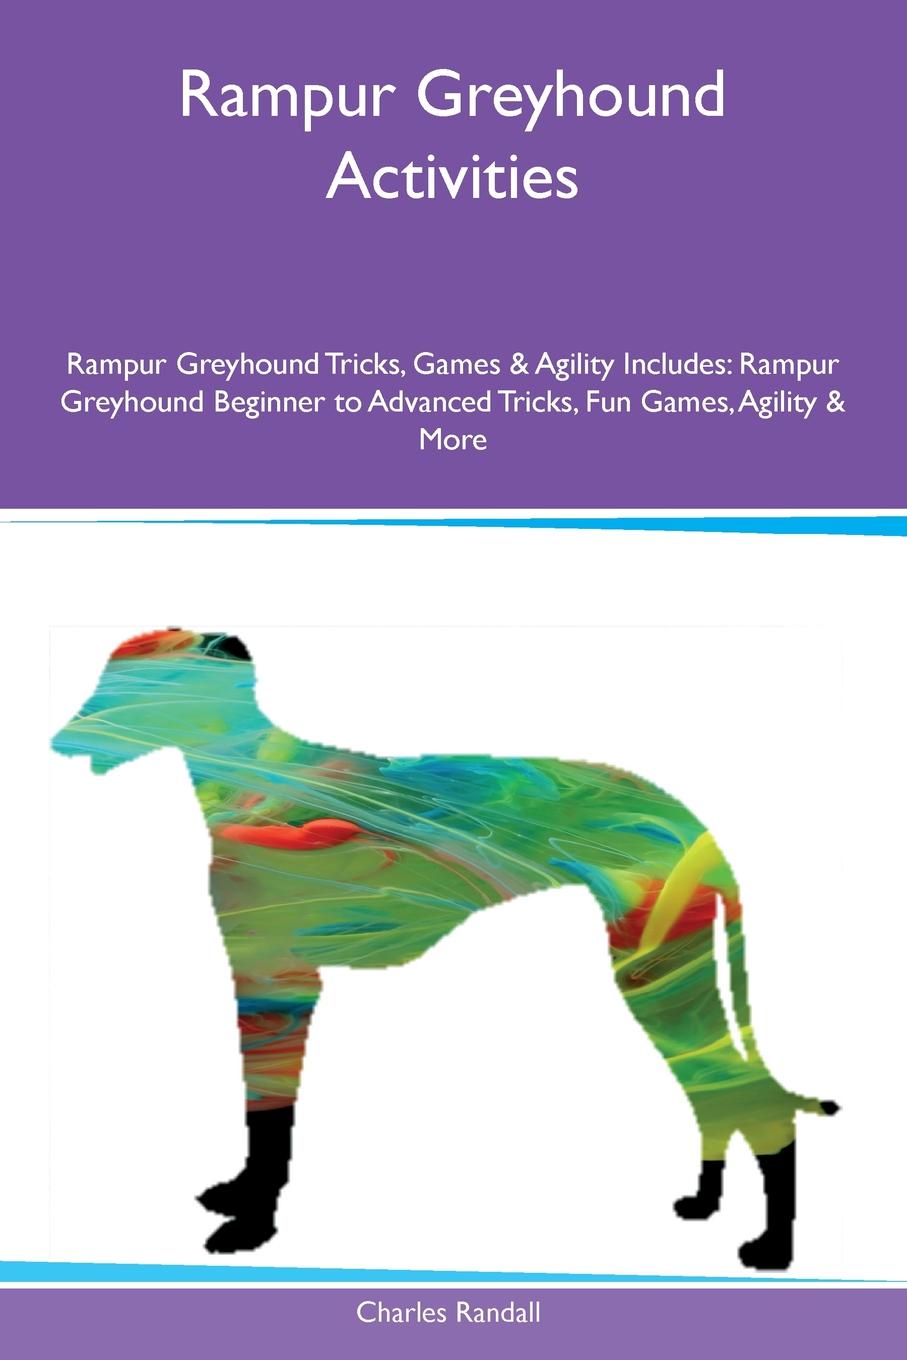 Rampur Greyhound Activities Rampur Greyhound Tricks, Games & Agility Includes. Rampur Greyhound Beginner to Advanced Tricks, Fun Games, Agility & More